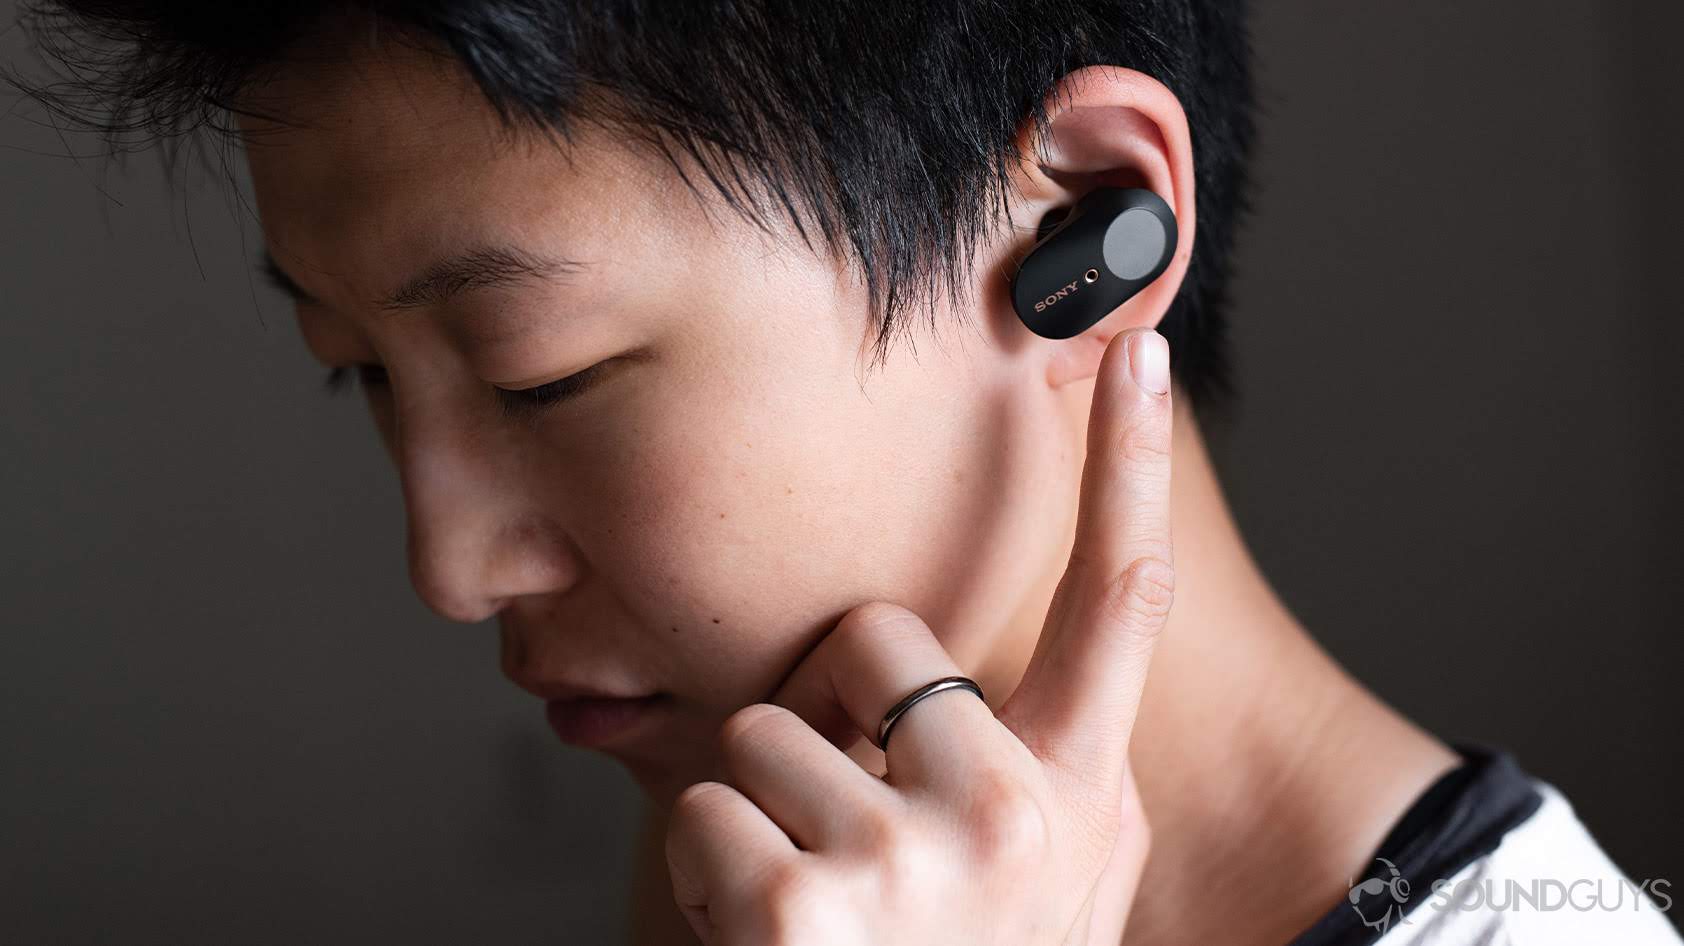 Sony WF-1000XM3 True Wireless Headphones Review - Reviewed